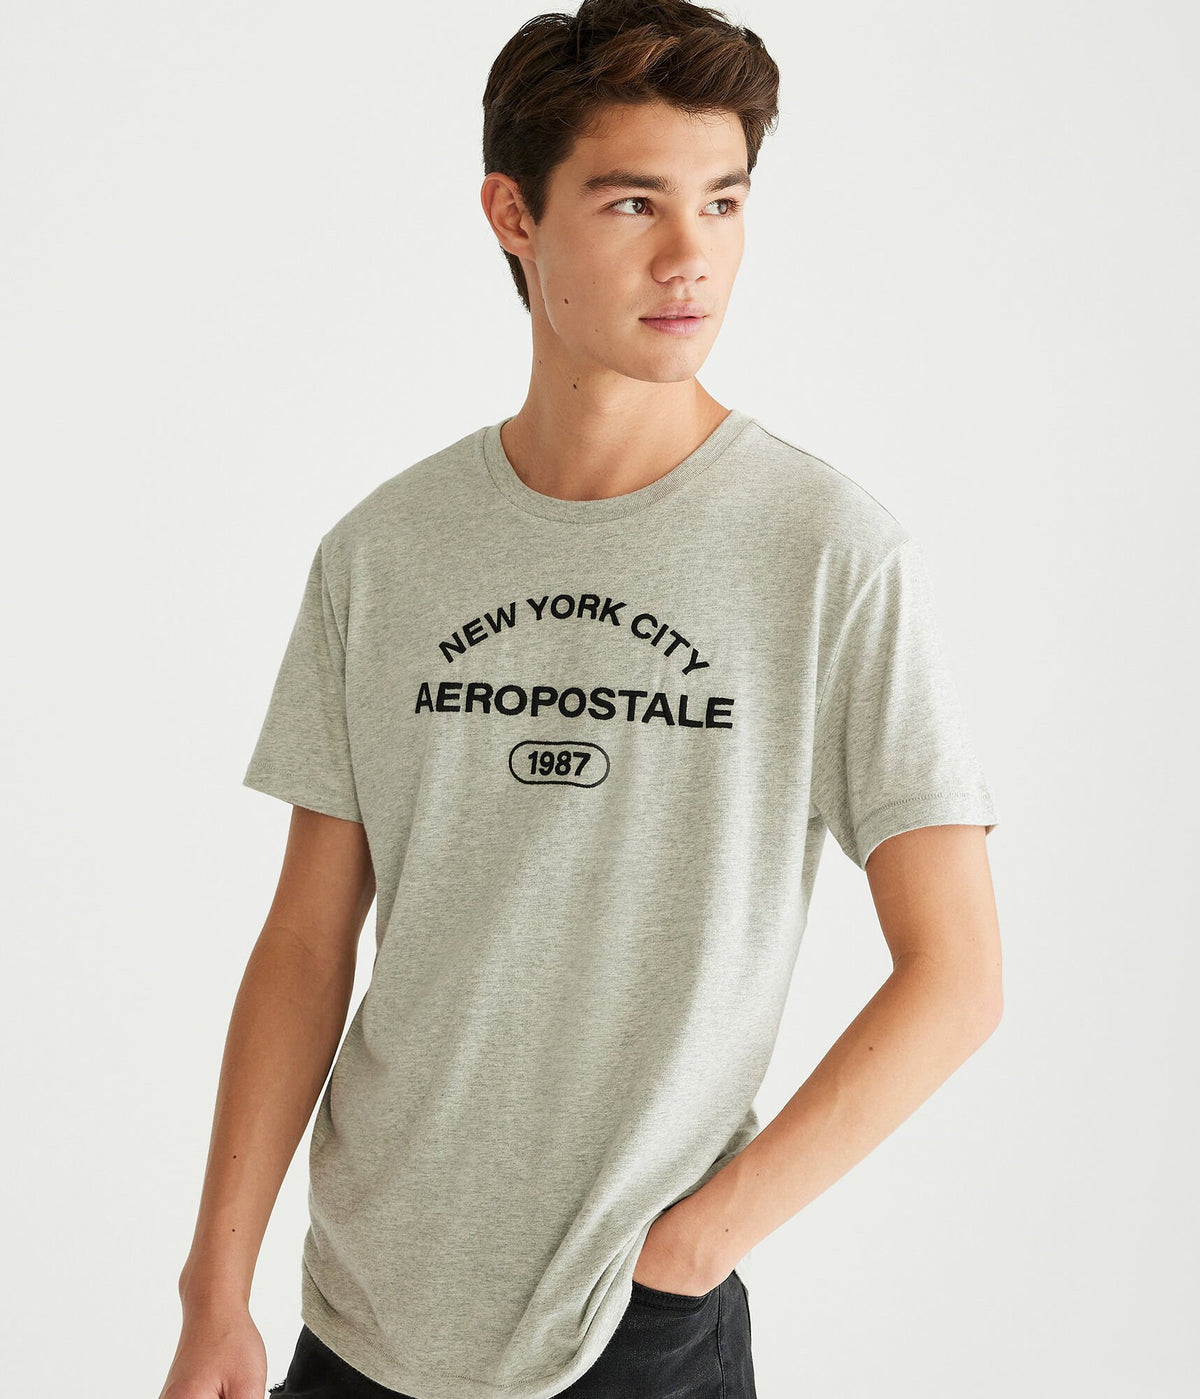 Aeropostale Mens' Aeropostale New York City Graphic Tee - Grey - Size S - Cotton - Teen Fashion & Clothing Light Heather Grey